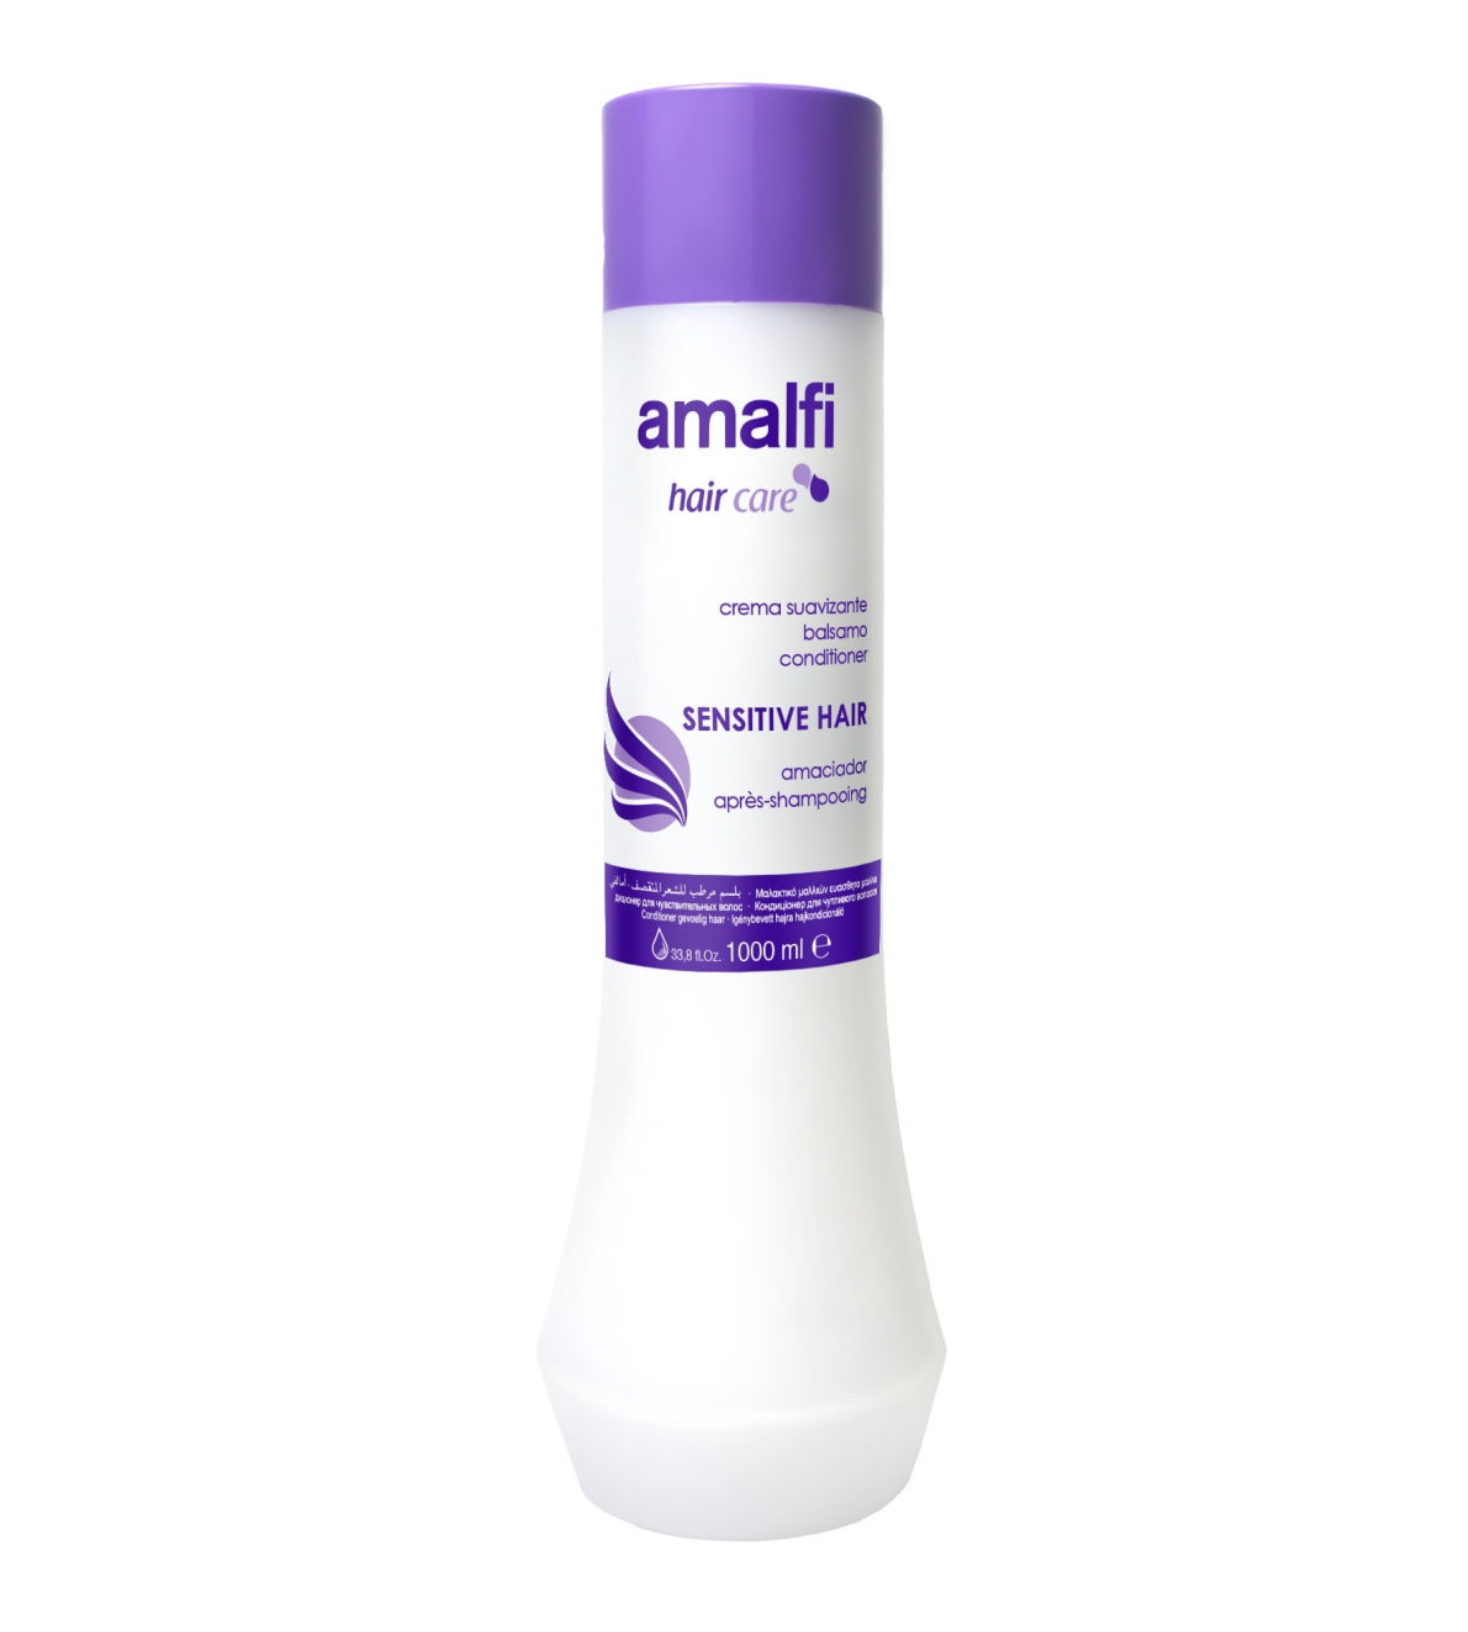   / Amalfi hair care -    Sensitive hair 1000 